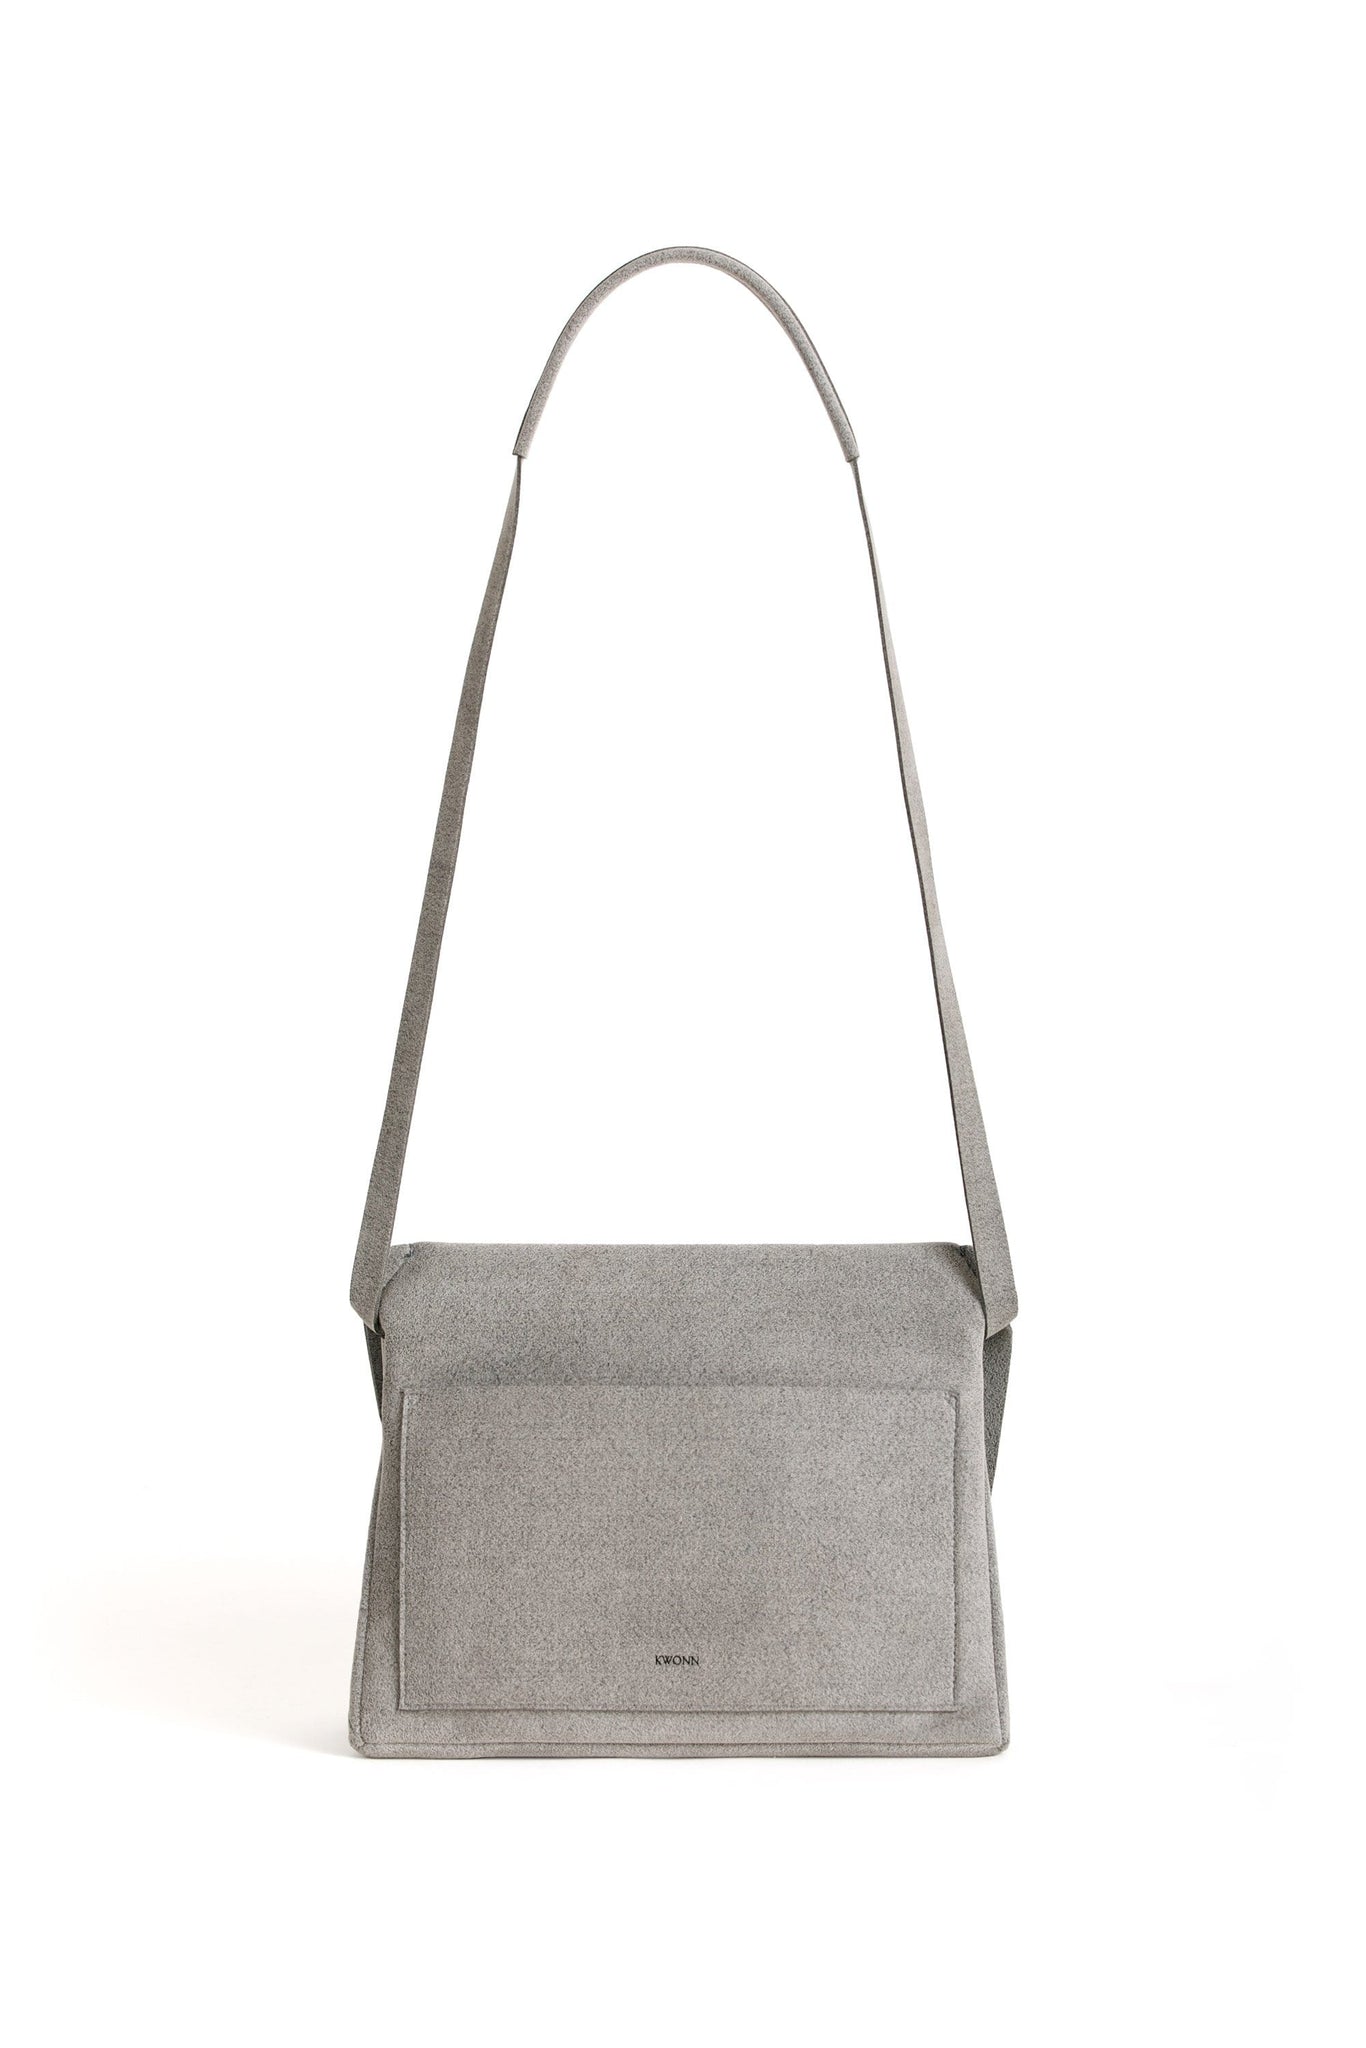 KWONN BAG Grey Crossbody vegan bags luxury bags handbags